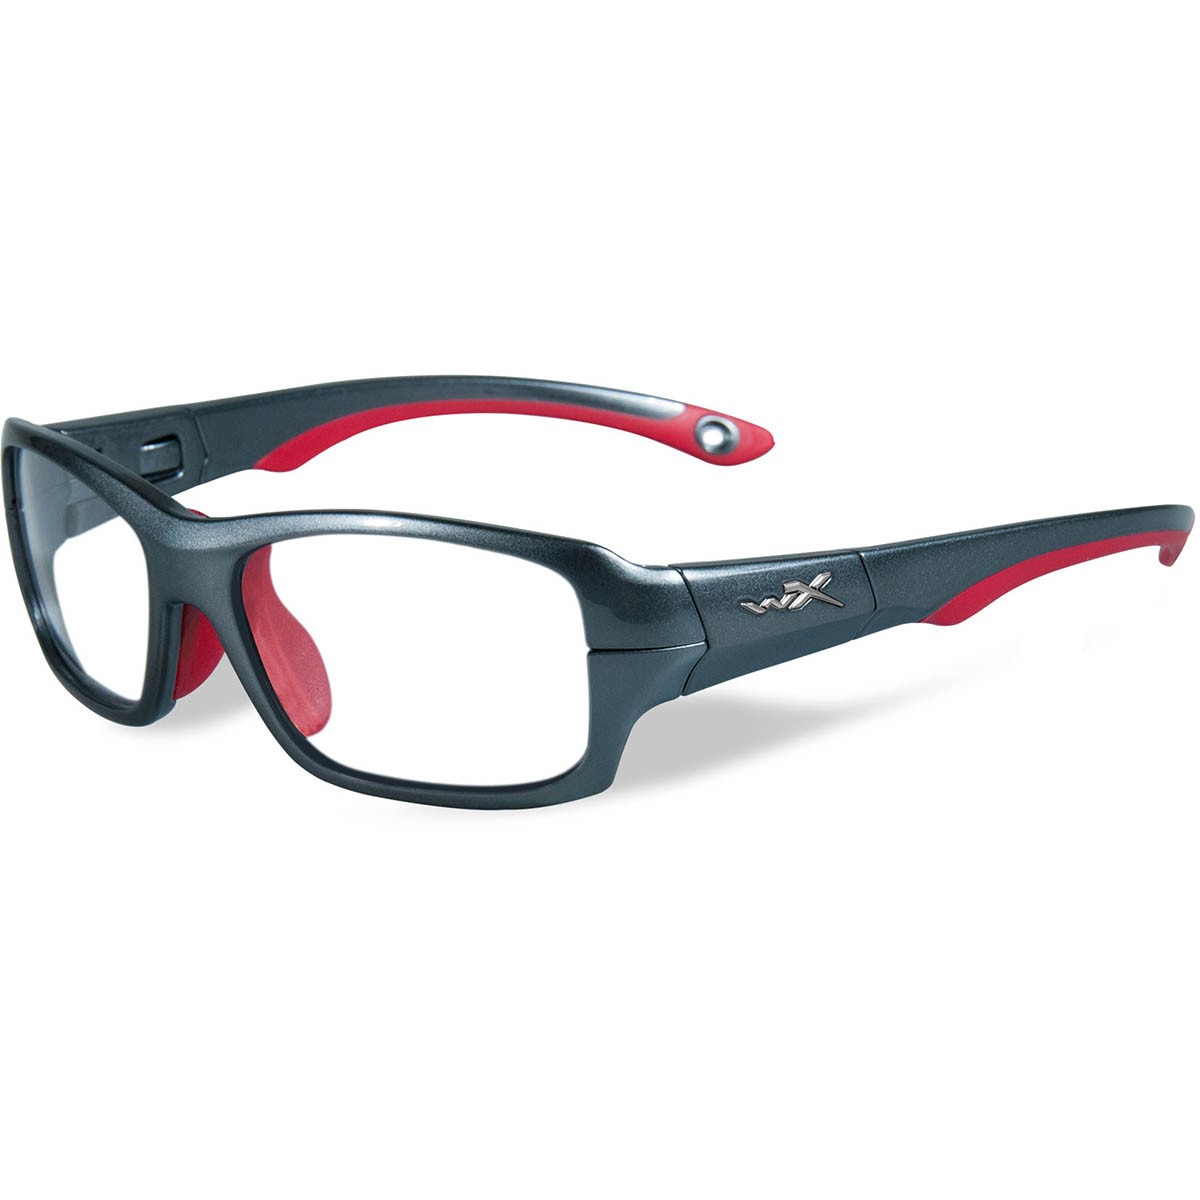 Очки пятерки. Очки Wiley-x z87. -025 Очки. Red Sport Glasses. Очки WILEYX спорт хит магазин.